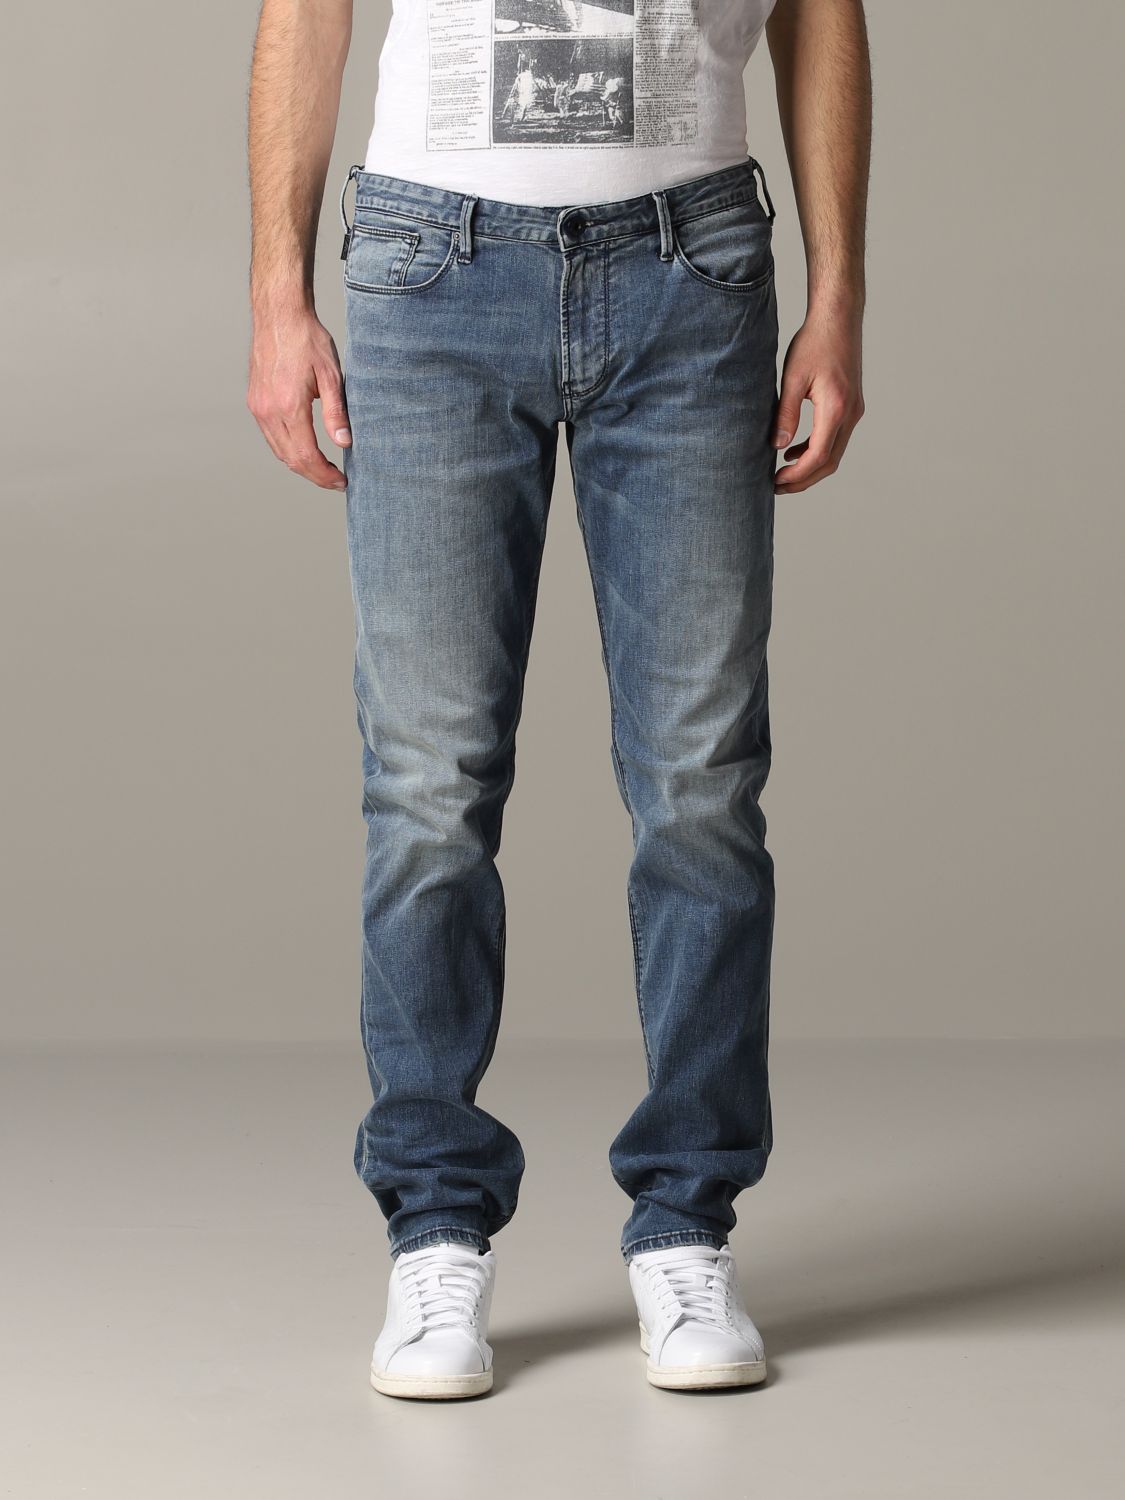 ea7 jeans mens